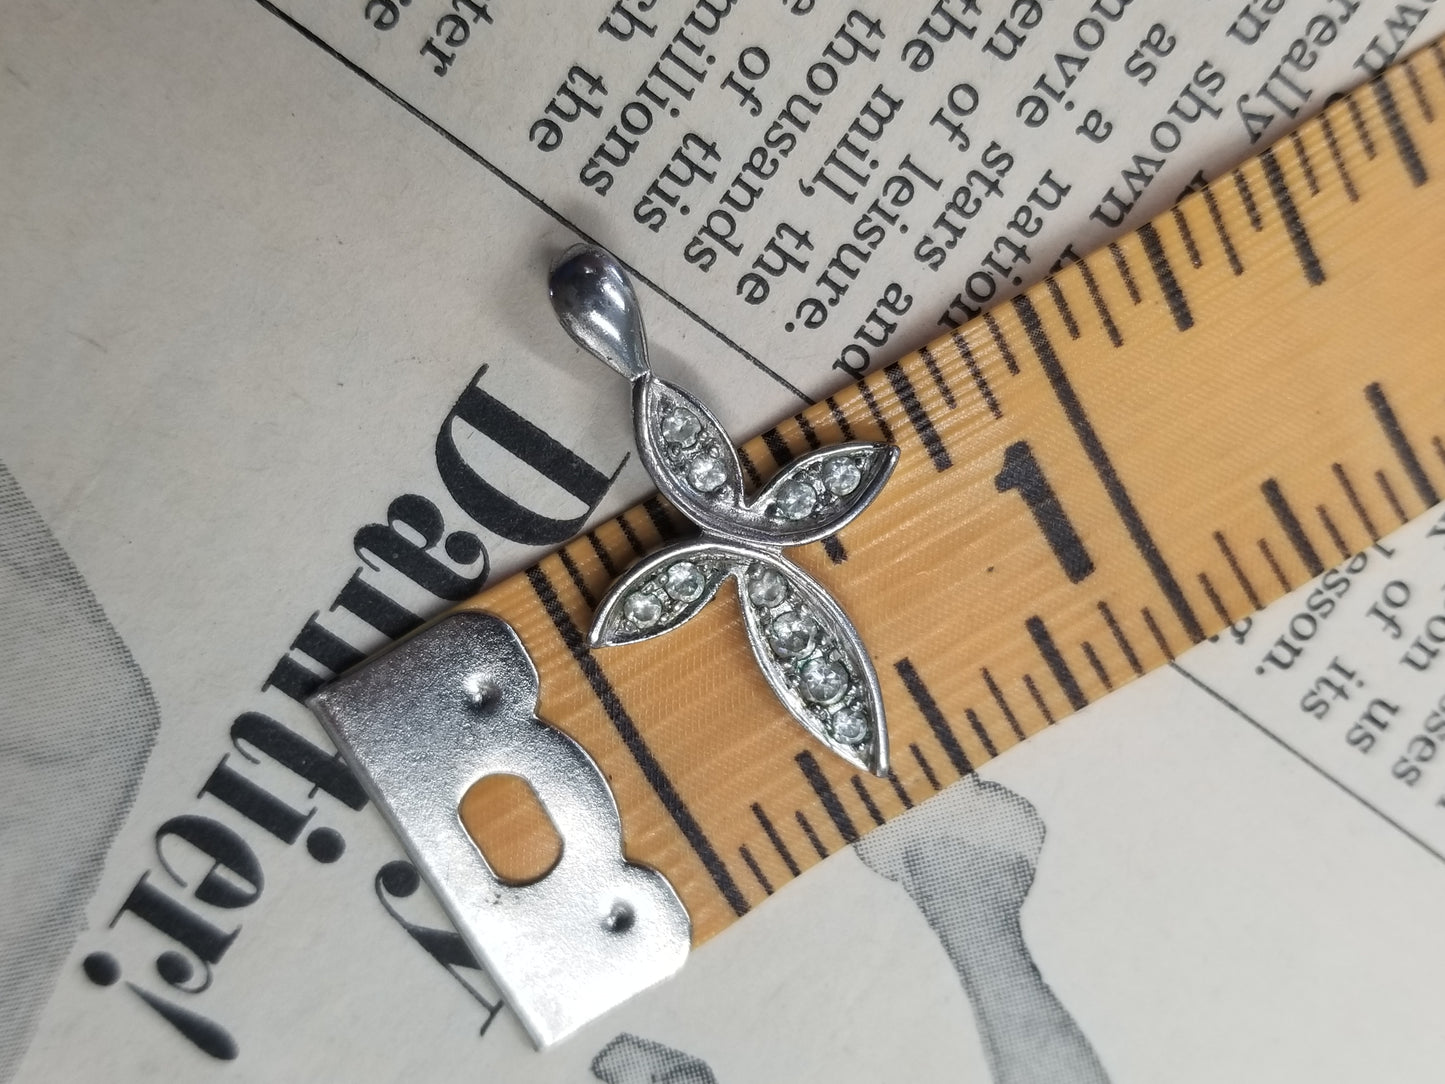 Sterling silver cubic zirconia pave set cross pendant